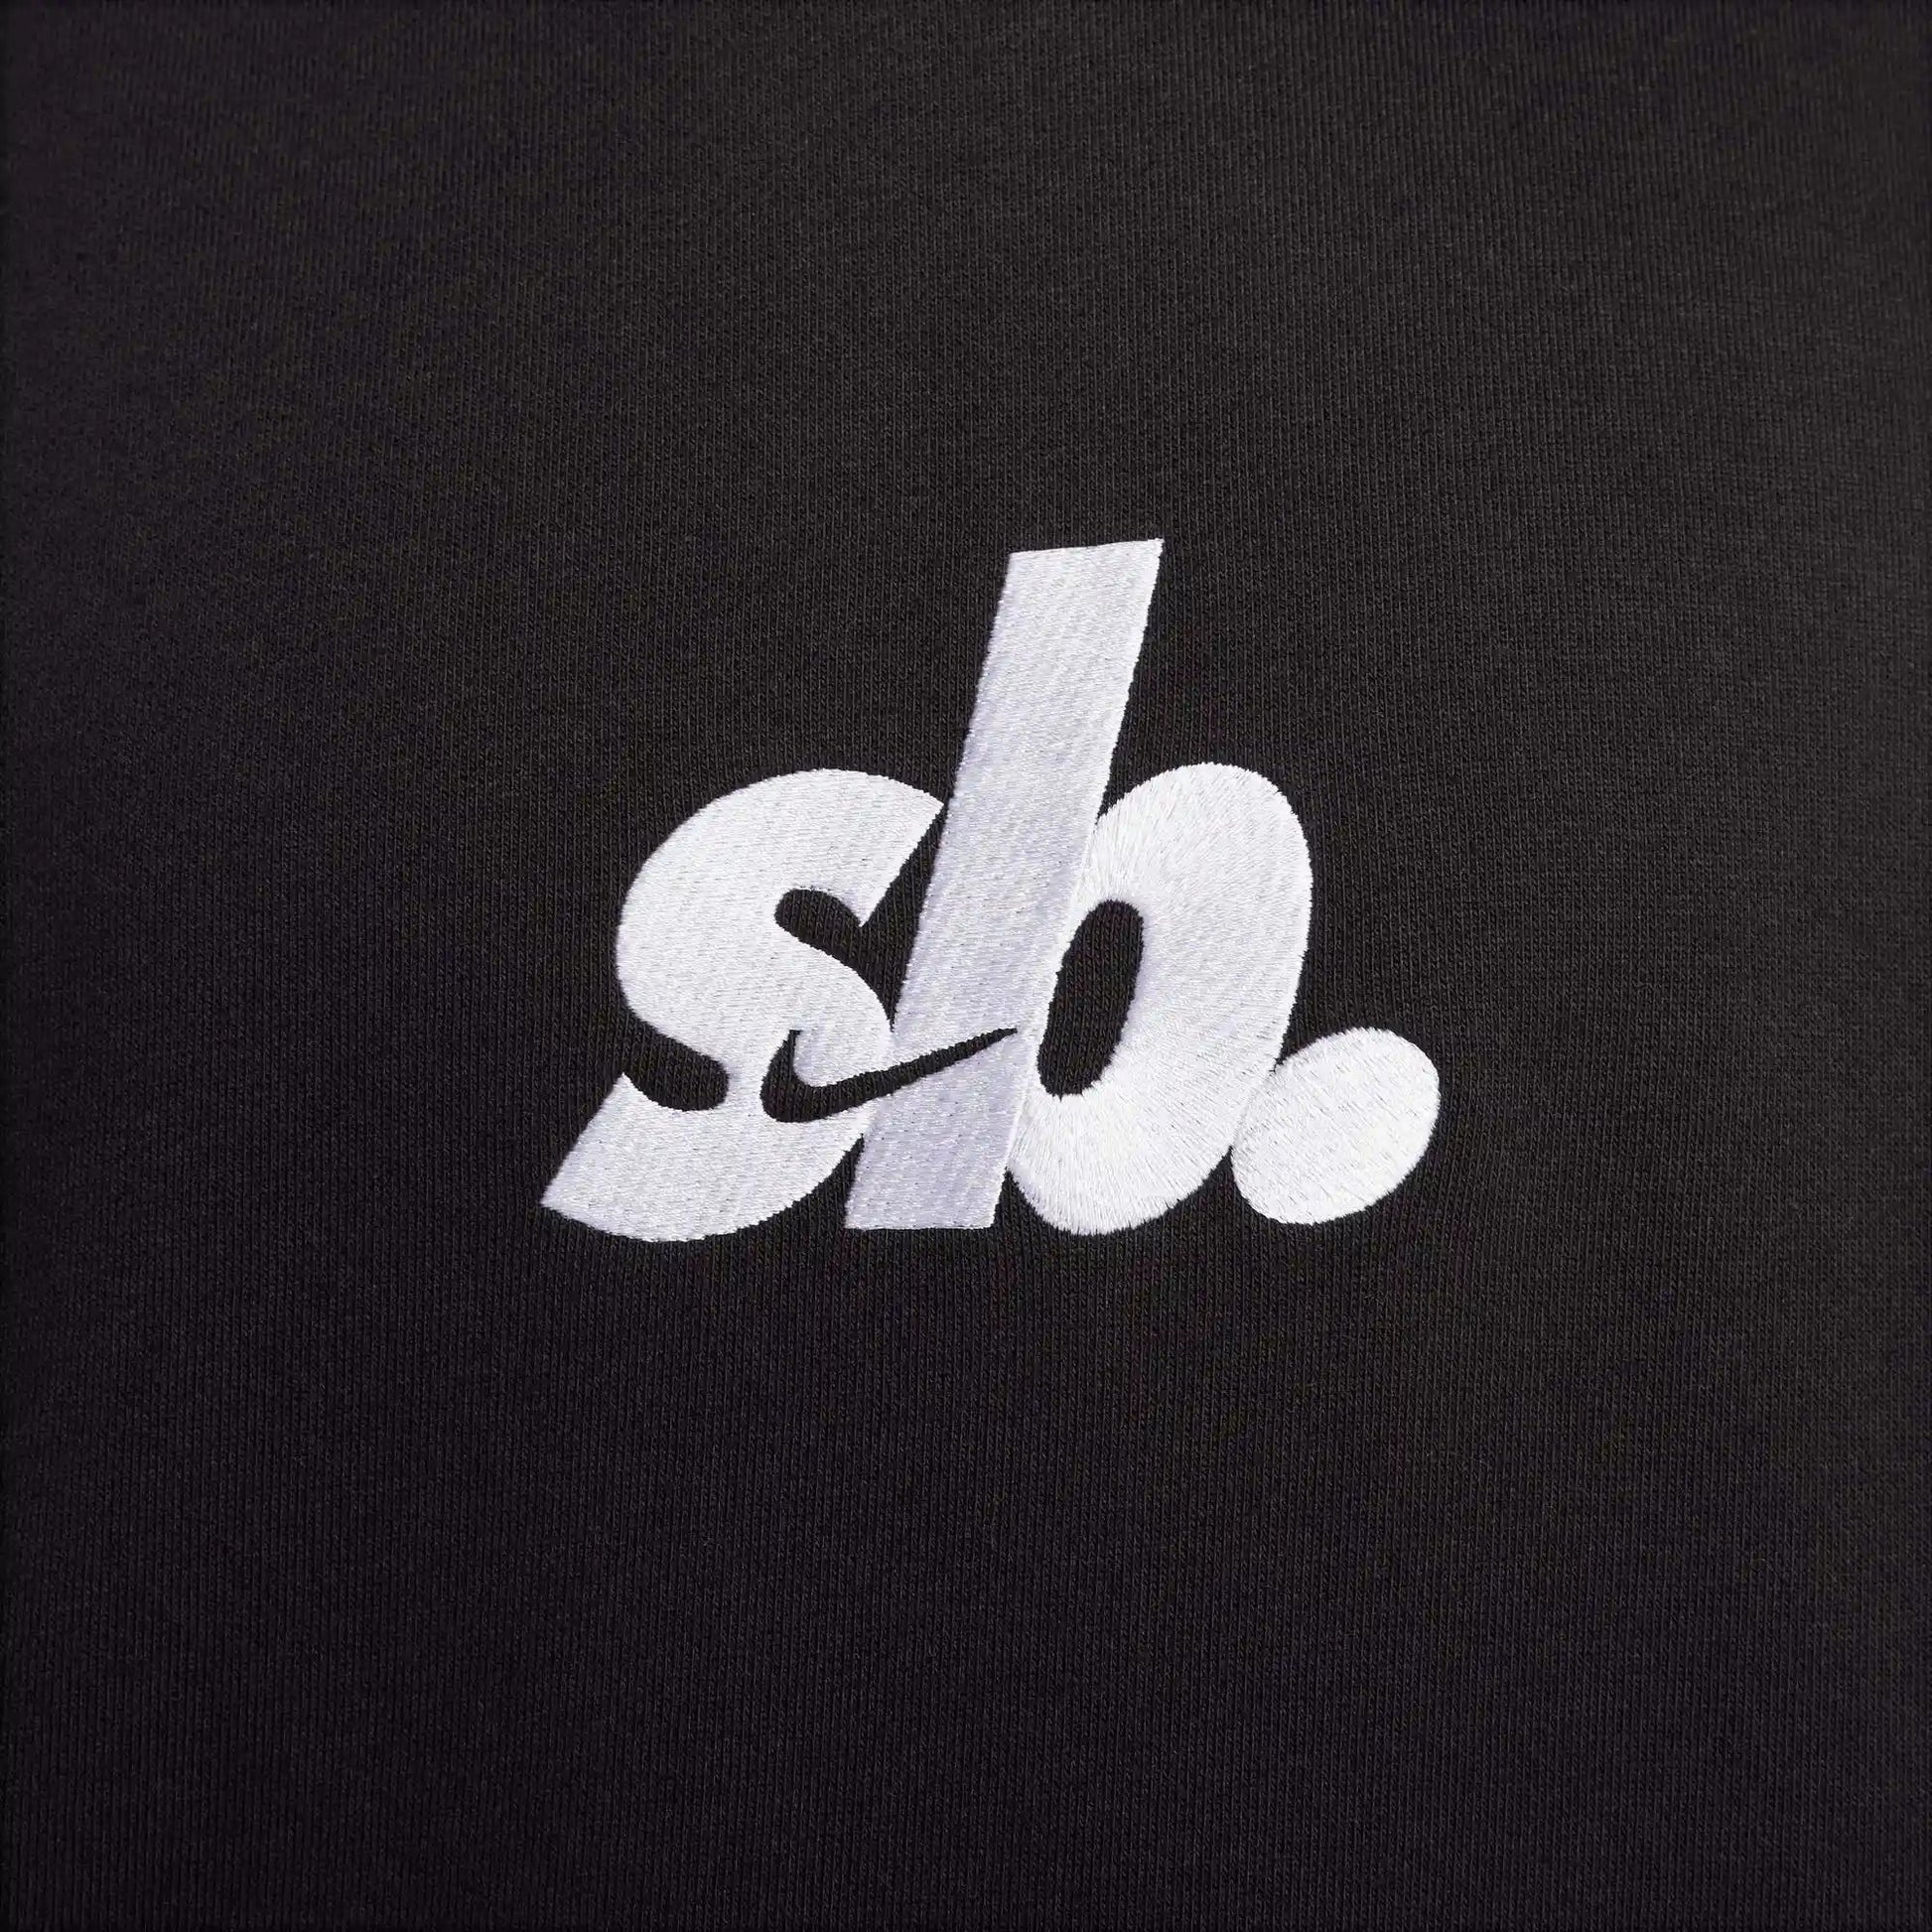 Nike SB Fleece Pullover Skate Hoodie, black/white - Tiki Room Skateboards - 2